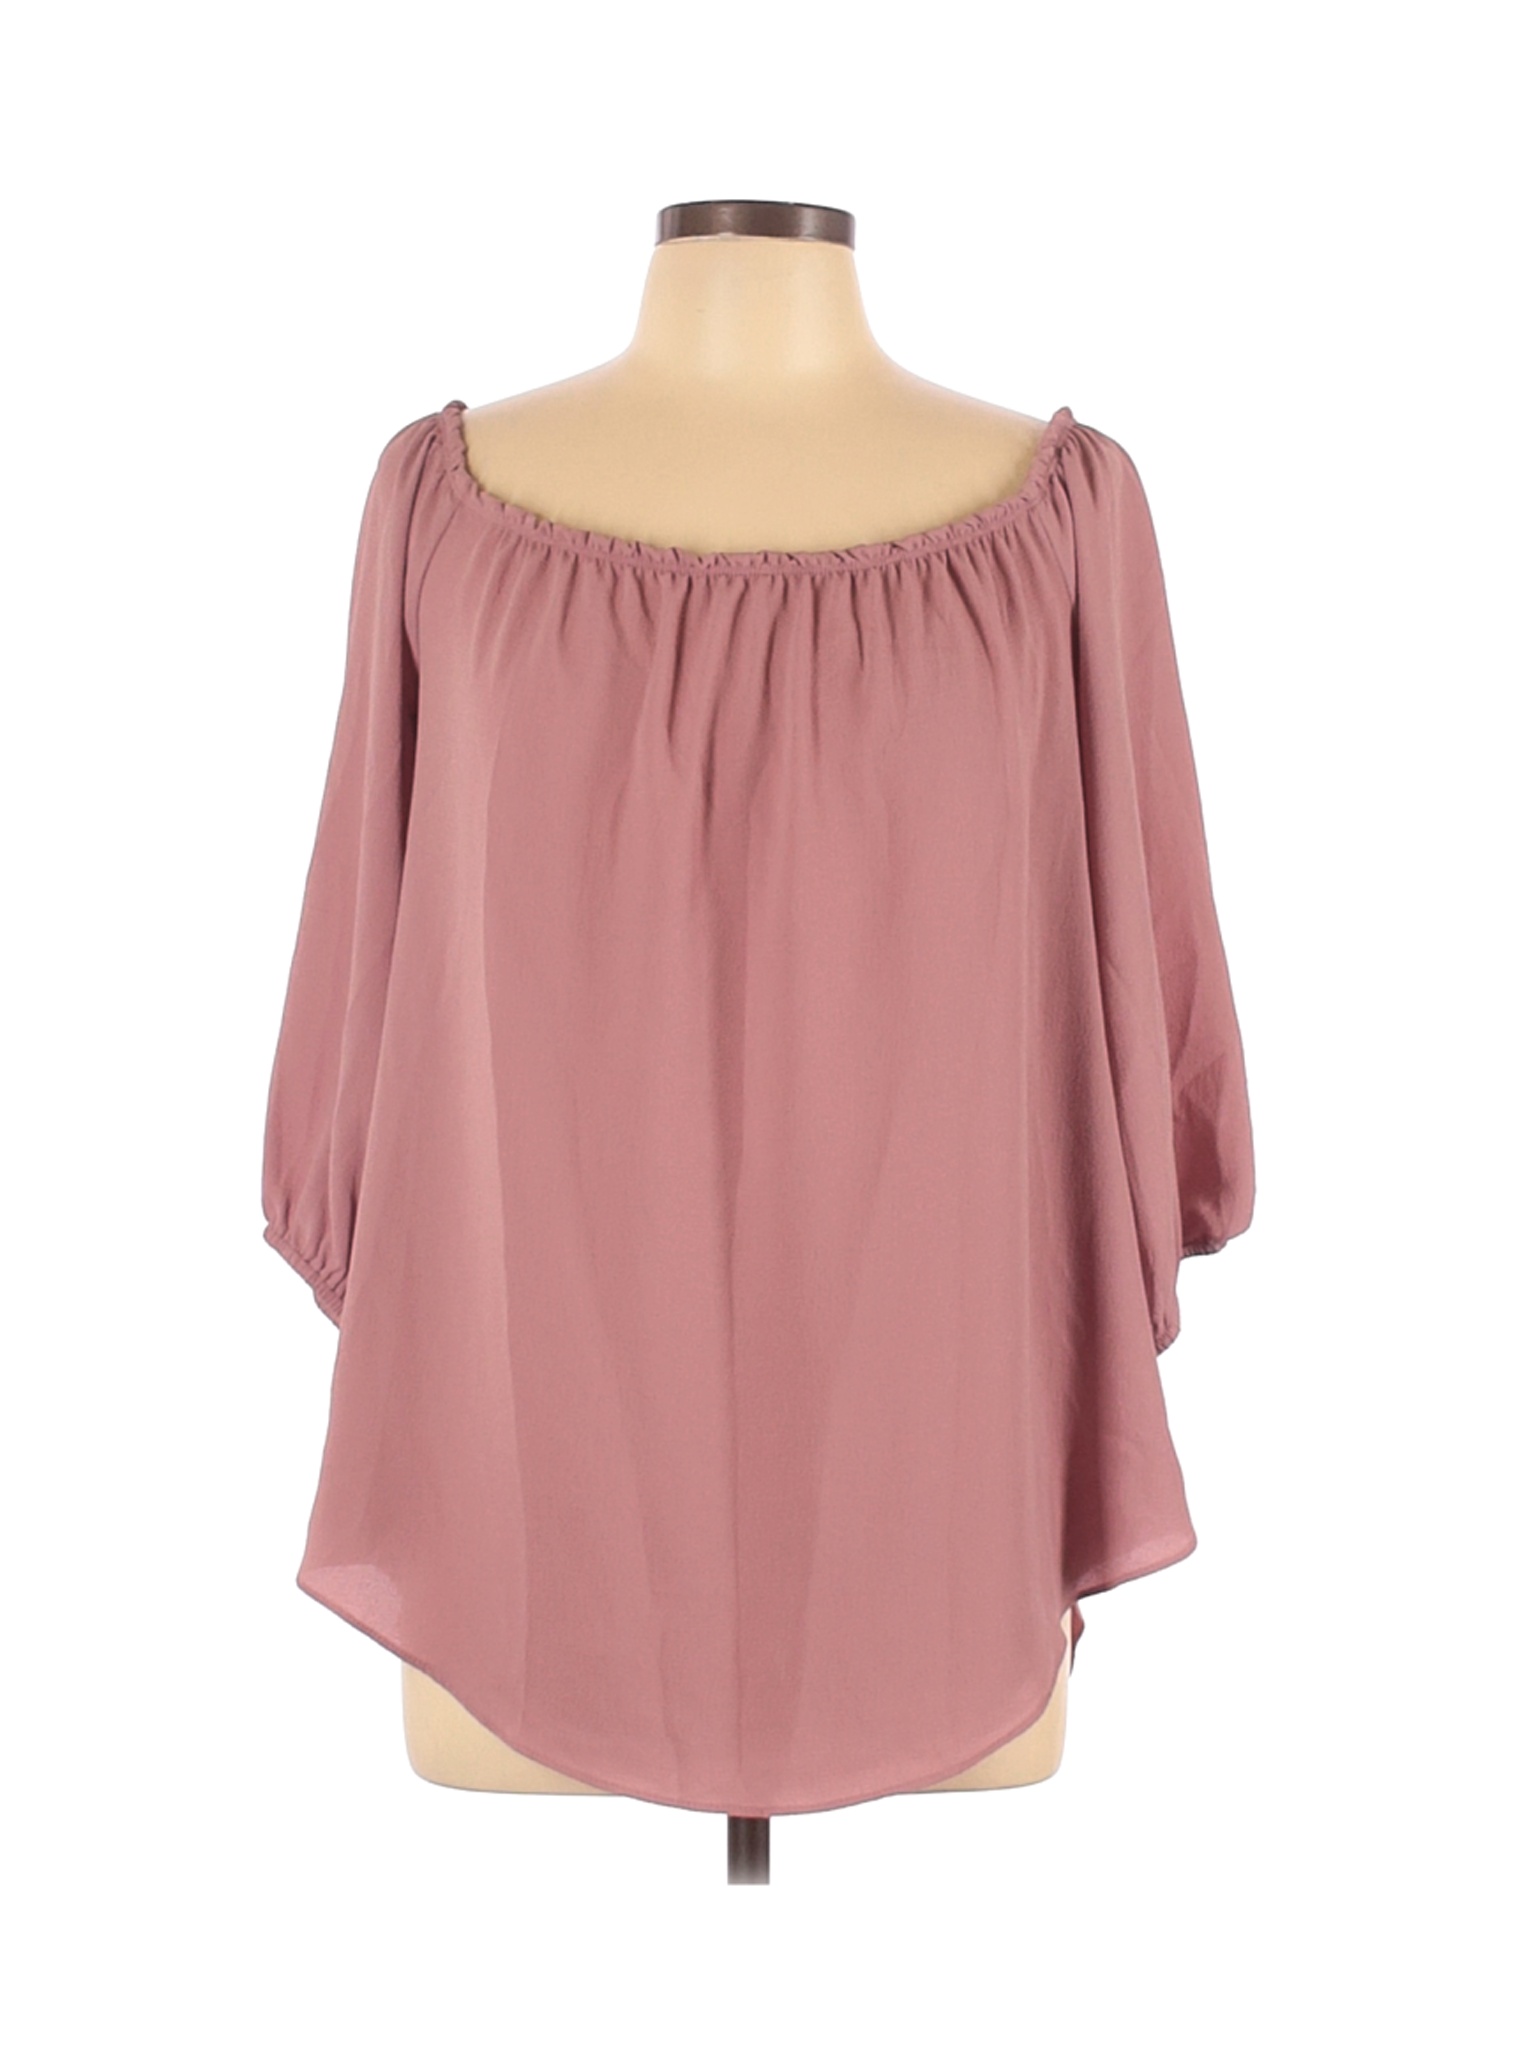 NWT Moa Moa Women Pink 3/4 Sleeve Blouse L | eBay